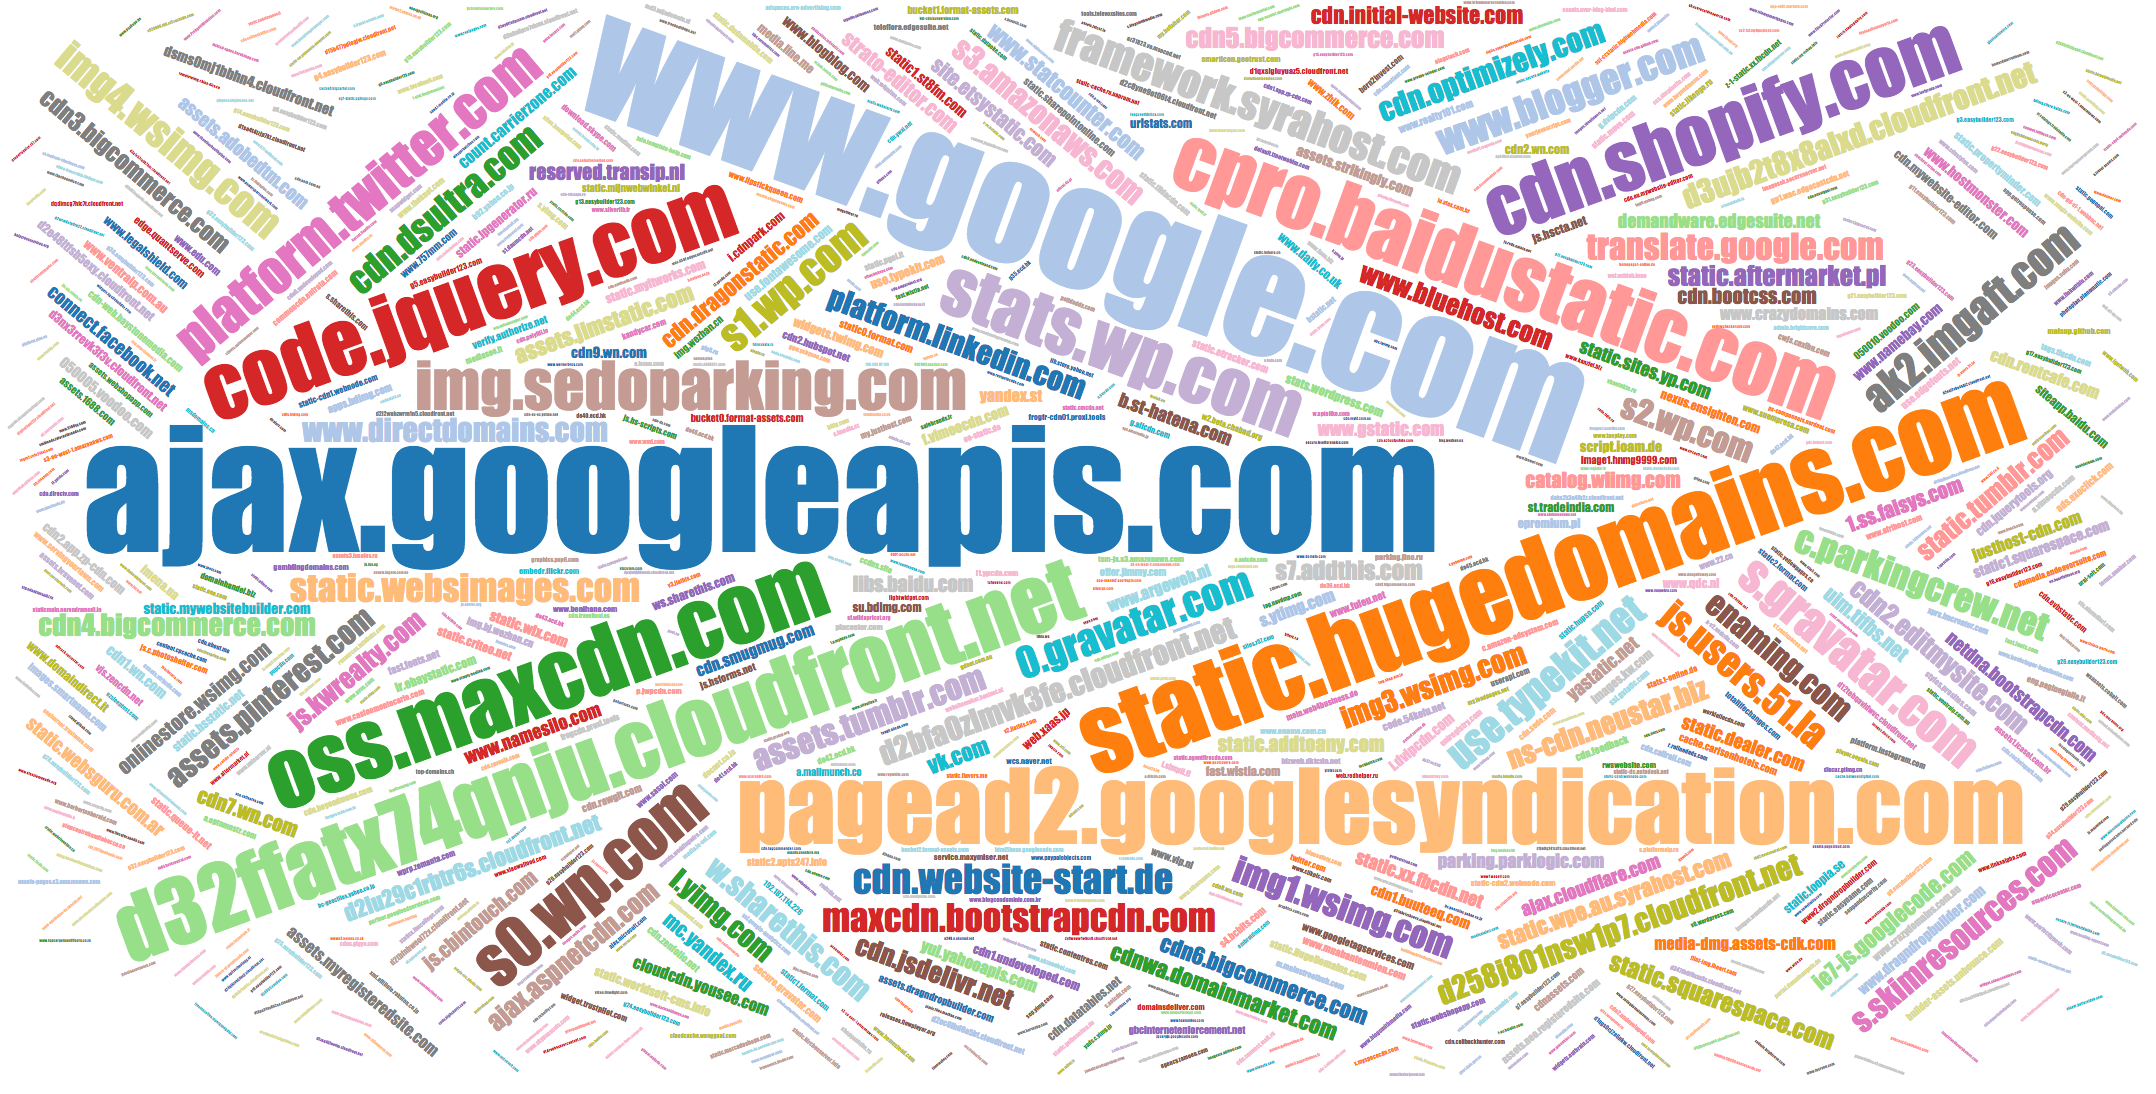 Popular names of JS domains pagead2.googlesyndication.com, platform.twitter.com, etc.